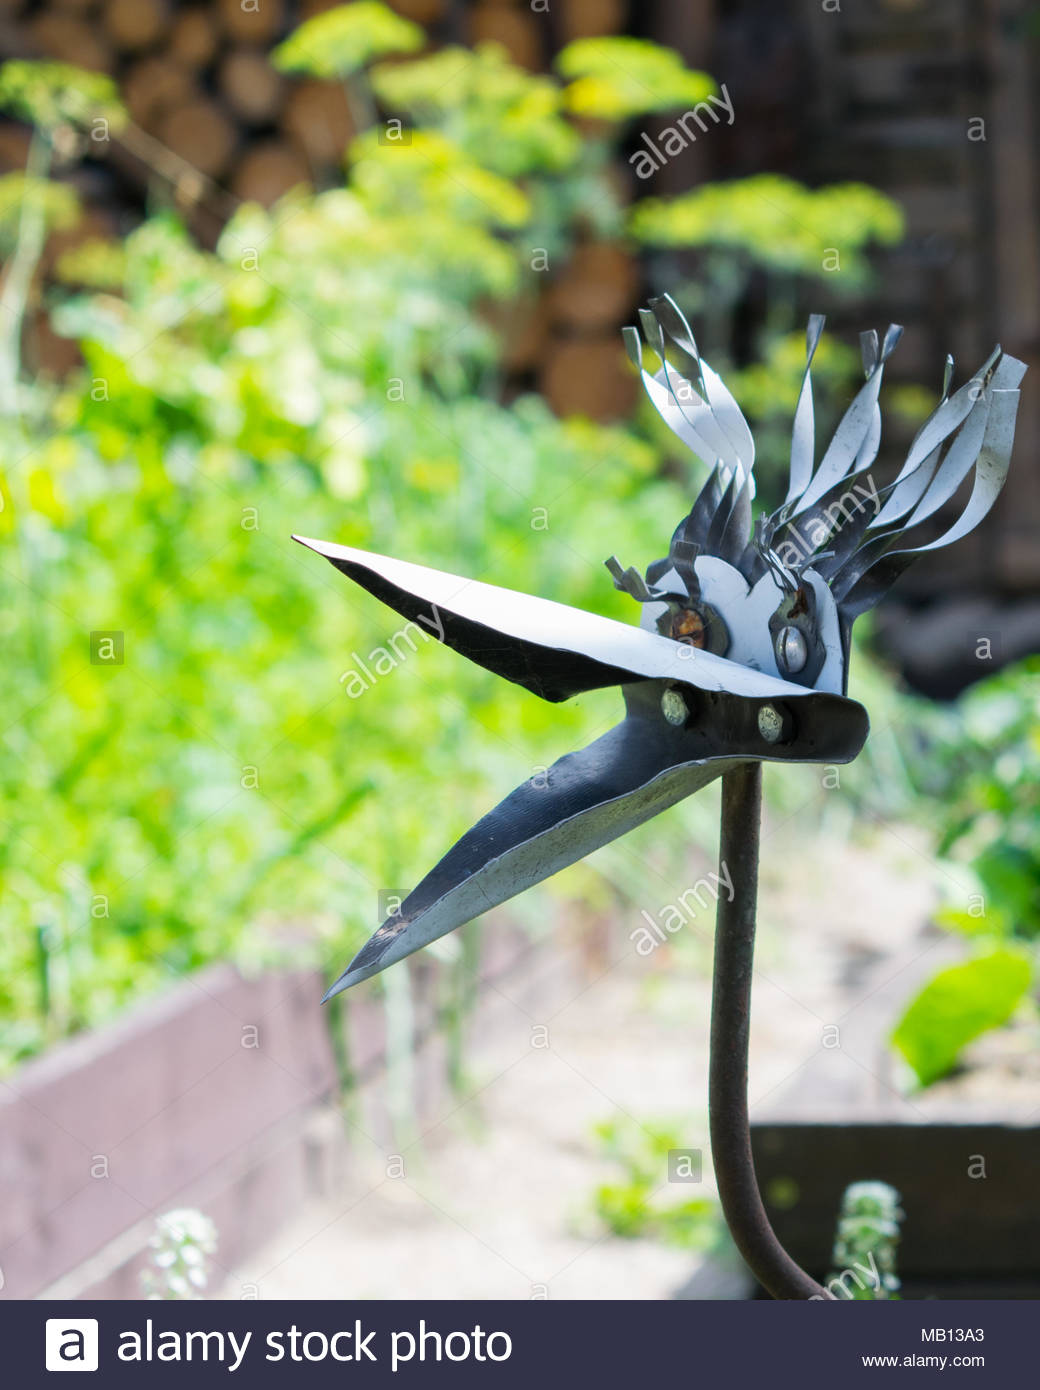 vogel aus metall skulptur im garten mb13a3